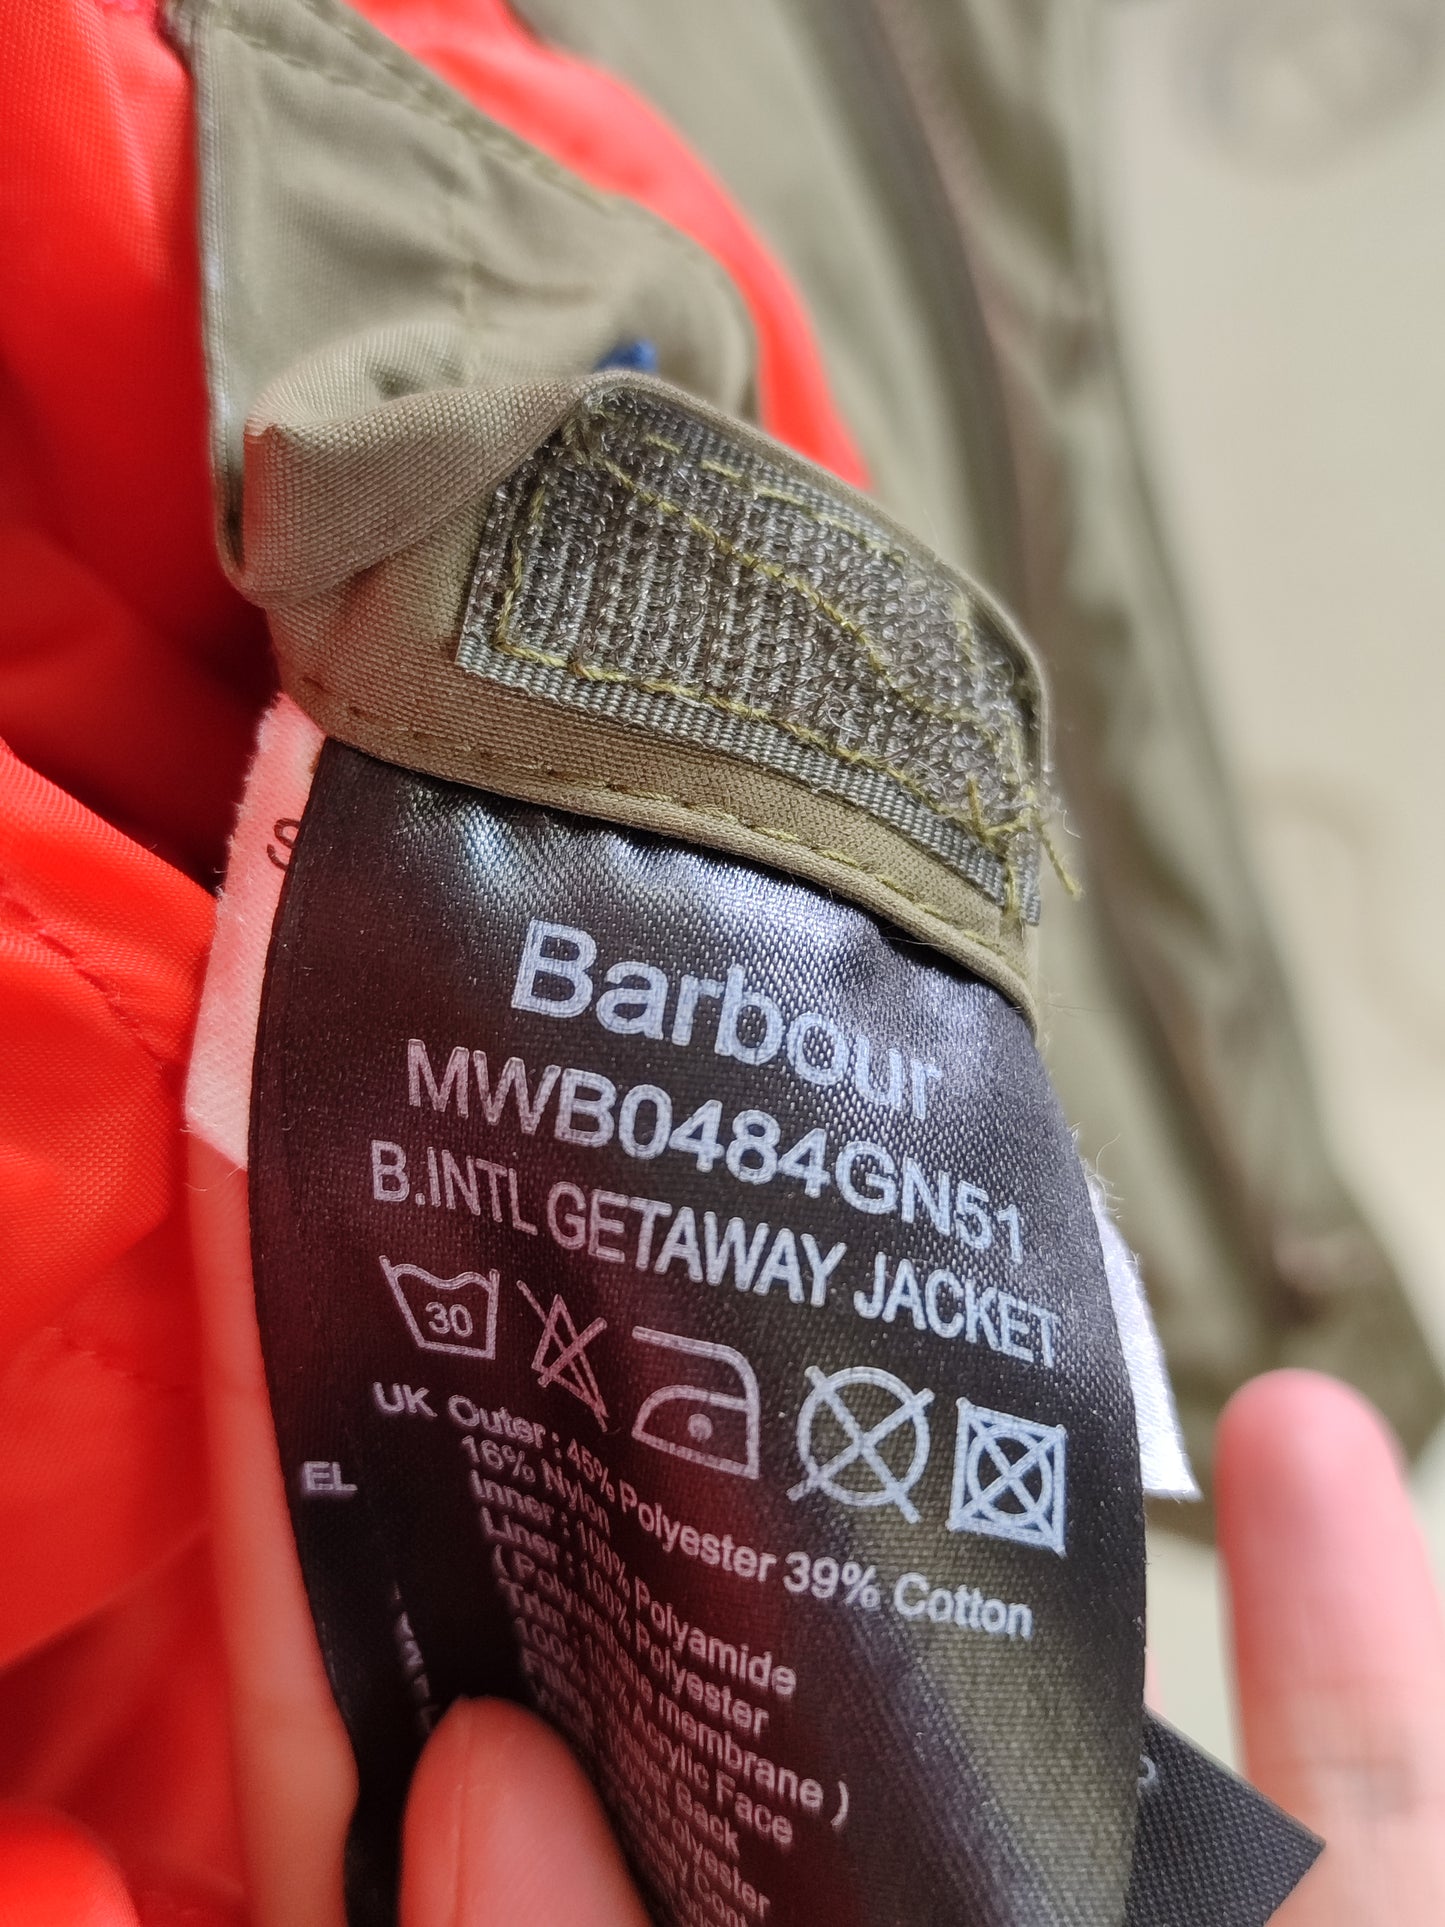 Parka Barbour International da uomo verde Medium - Man Waterproof Green Getaway Jacket size M